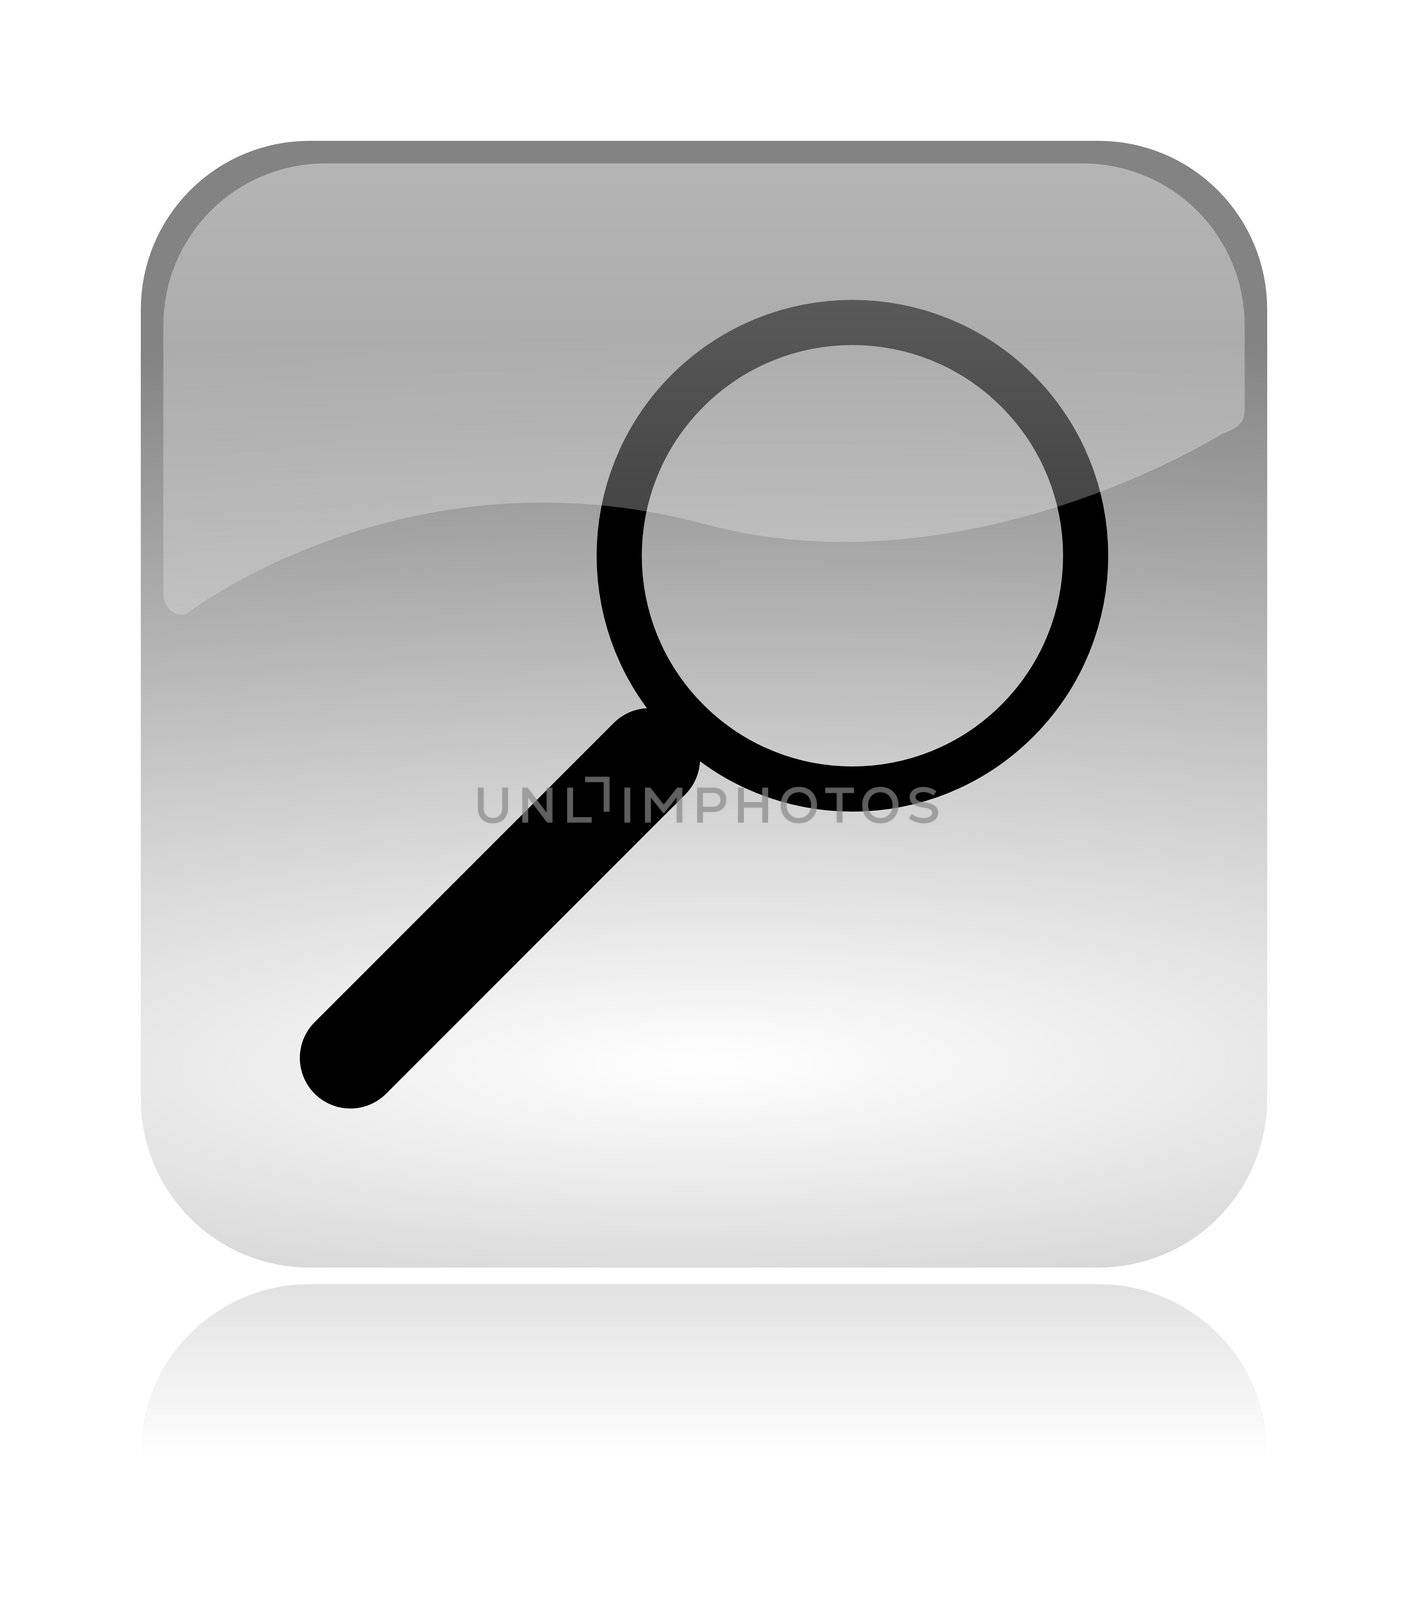 Search lens web interface icon by make